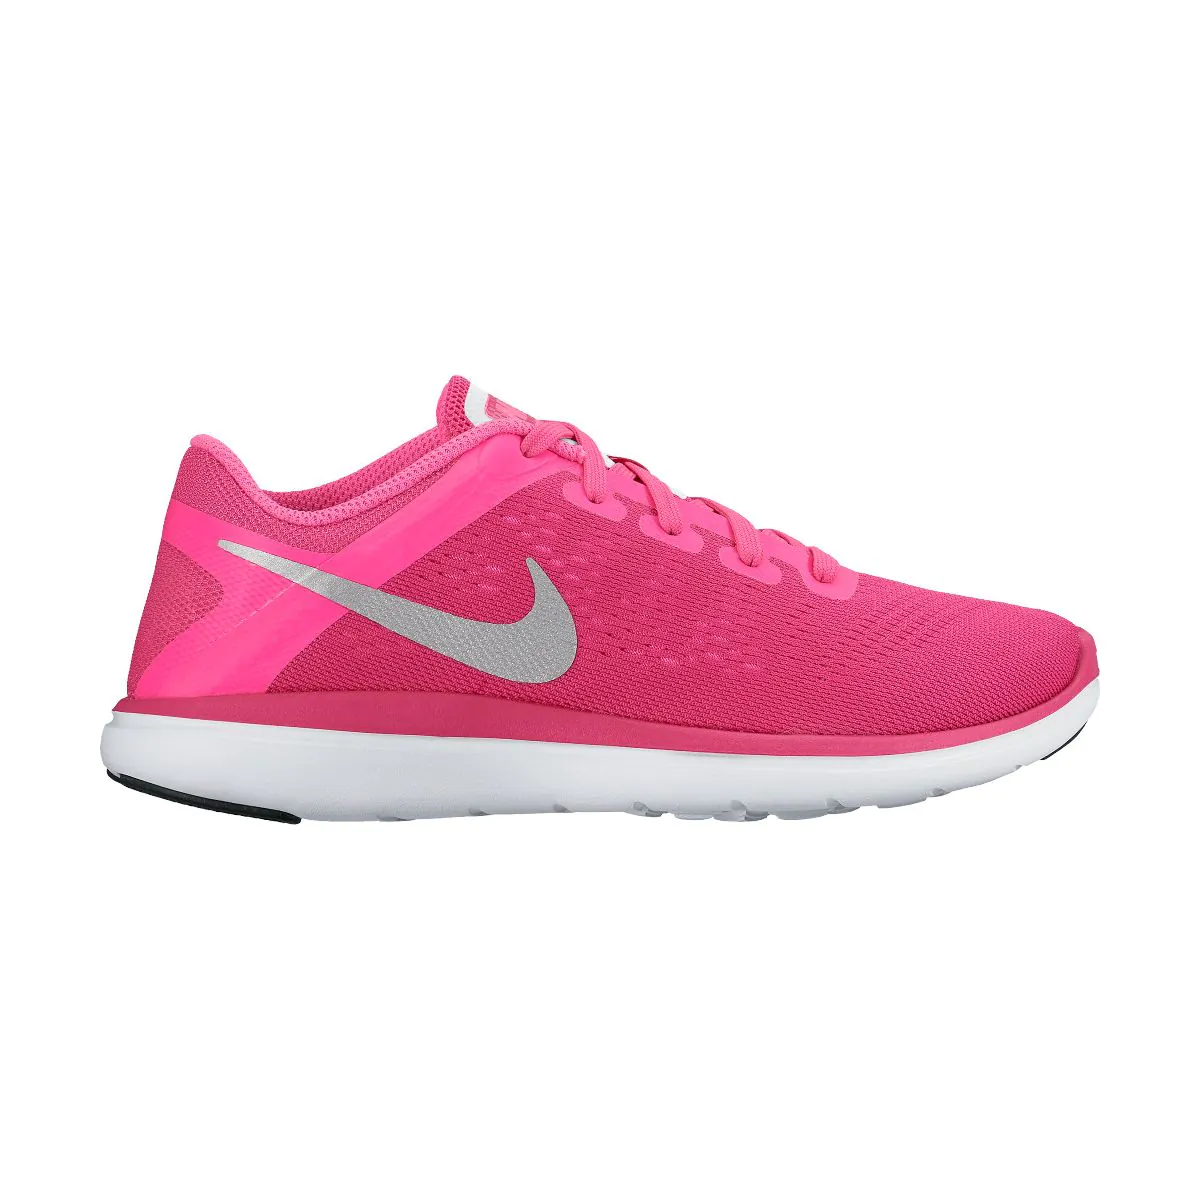 Nike Girls' Running Shoes 834281-600